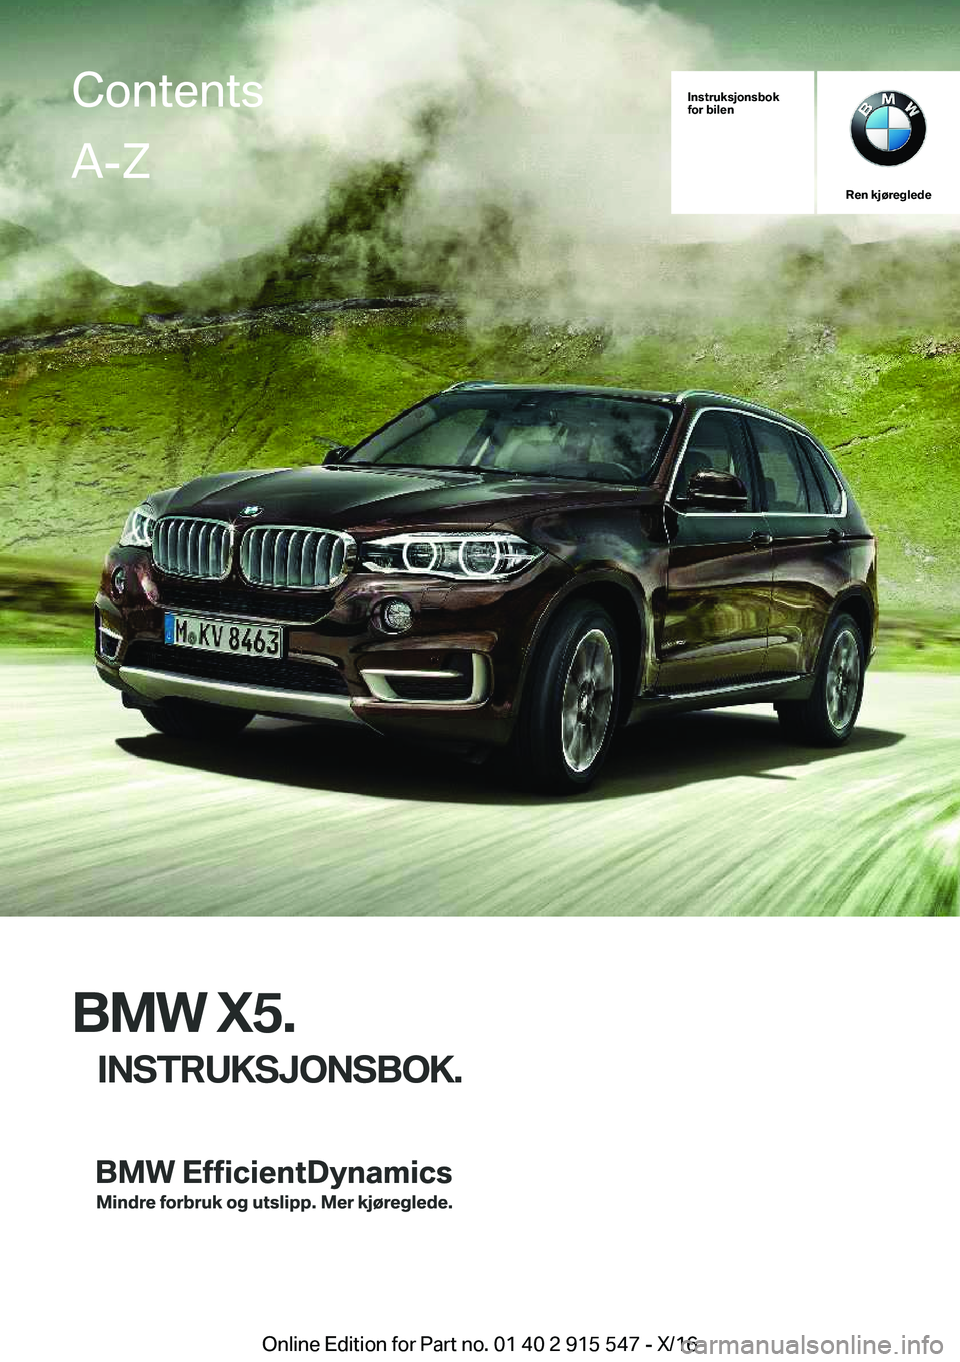 BMW X5 2017  InstruksjonsbØker (in Norwegian) �I�n�s�t�r�u�k�s�j�o�n�s�b�o�k
�f�o�r��b�i�l�e�n
�R�e�n��k�j�